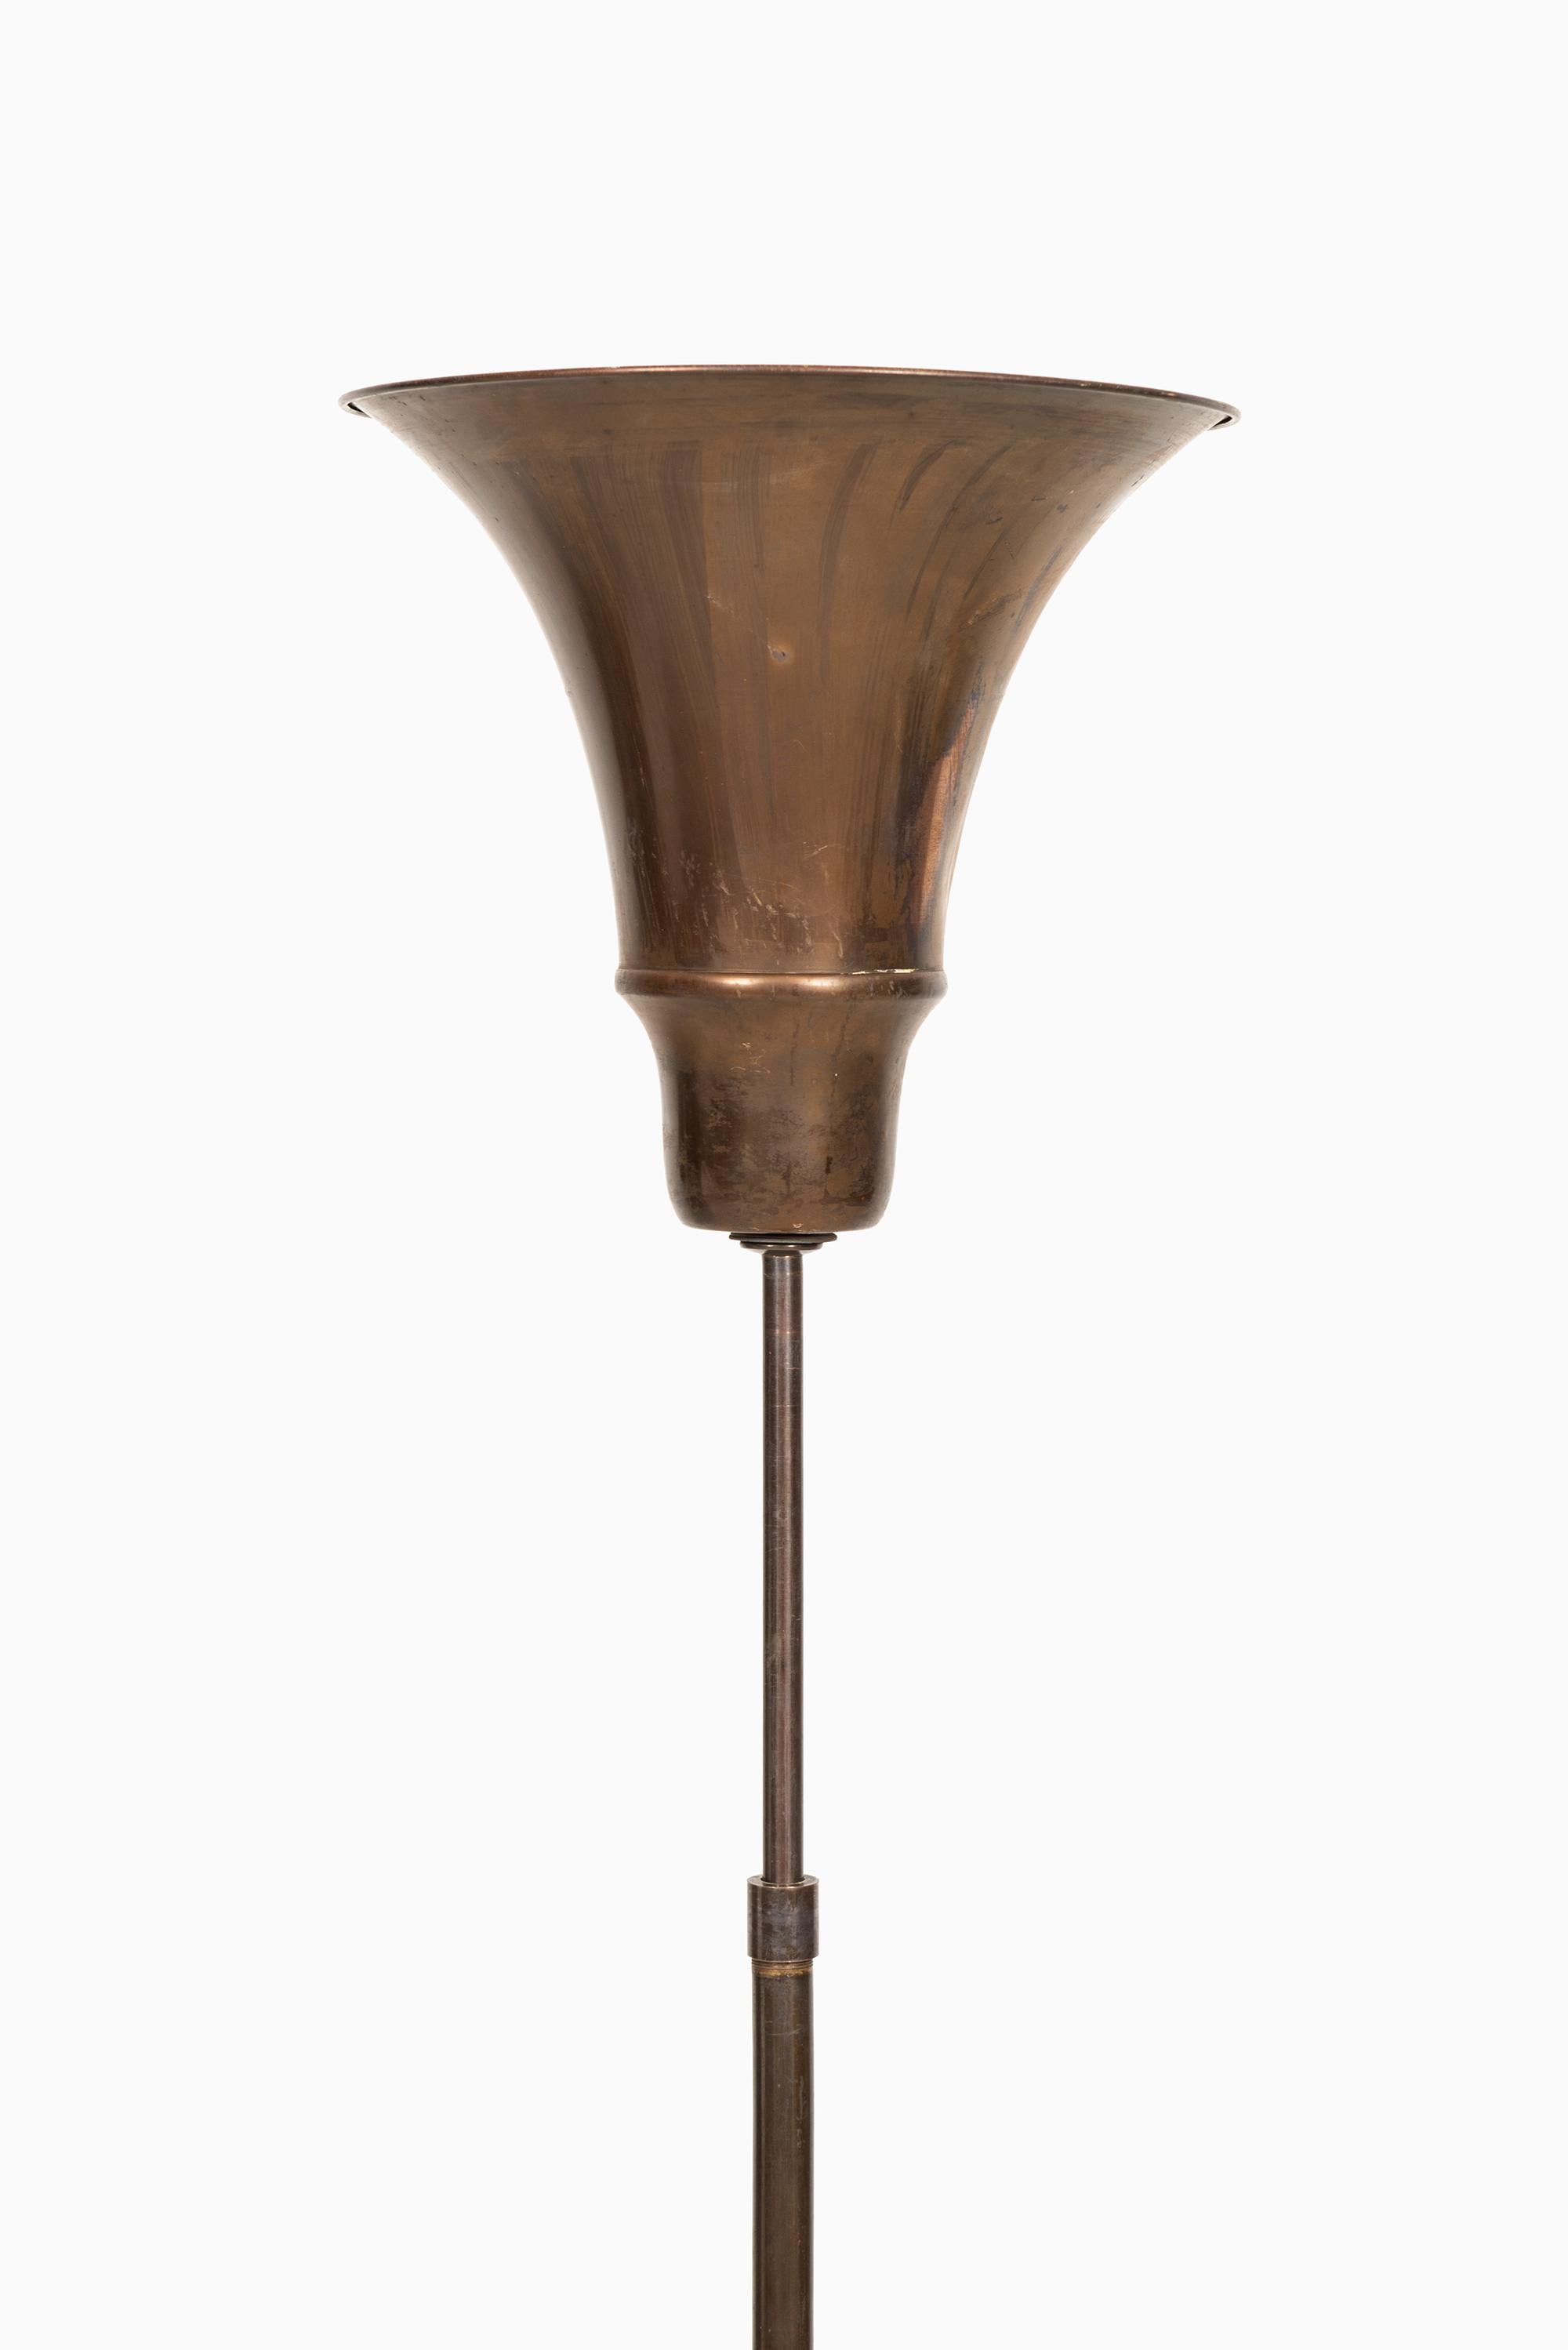 Rare “The Bridge Lamp” height adjustable floor lamp / uplight. Produced by Louis Poulsen in Denmark.
Measure: Height: 140-210 cm.